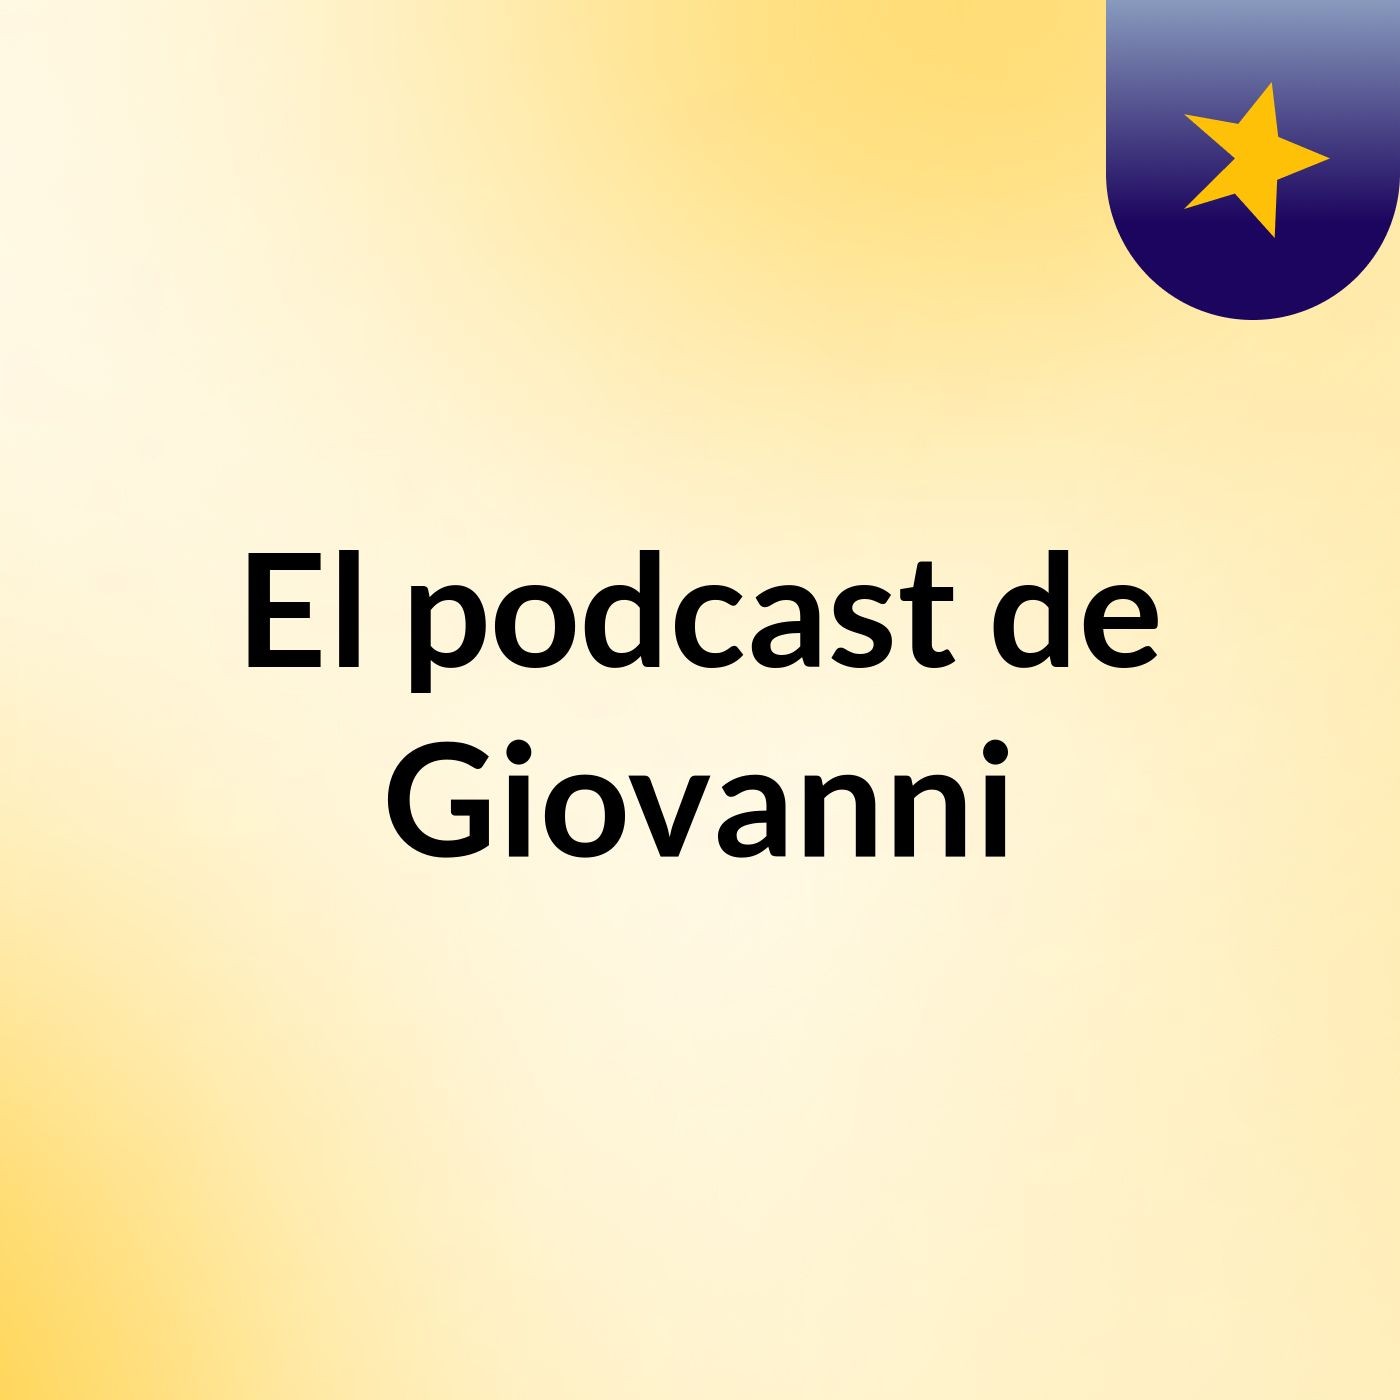 El podcast de Giovanni